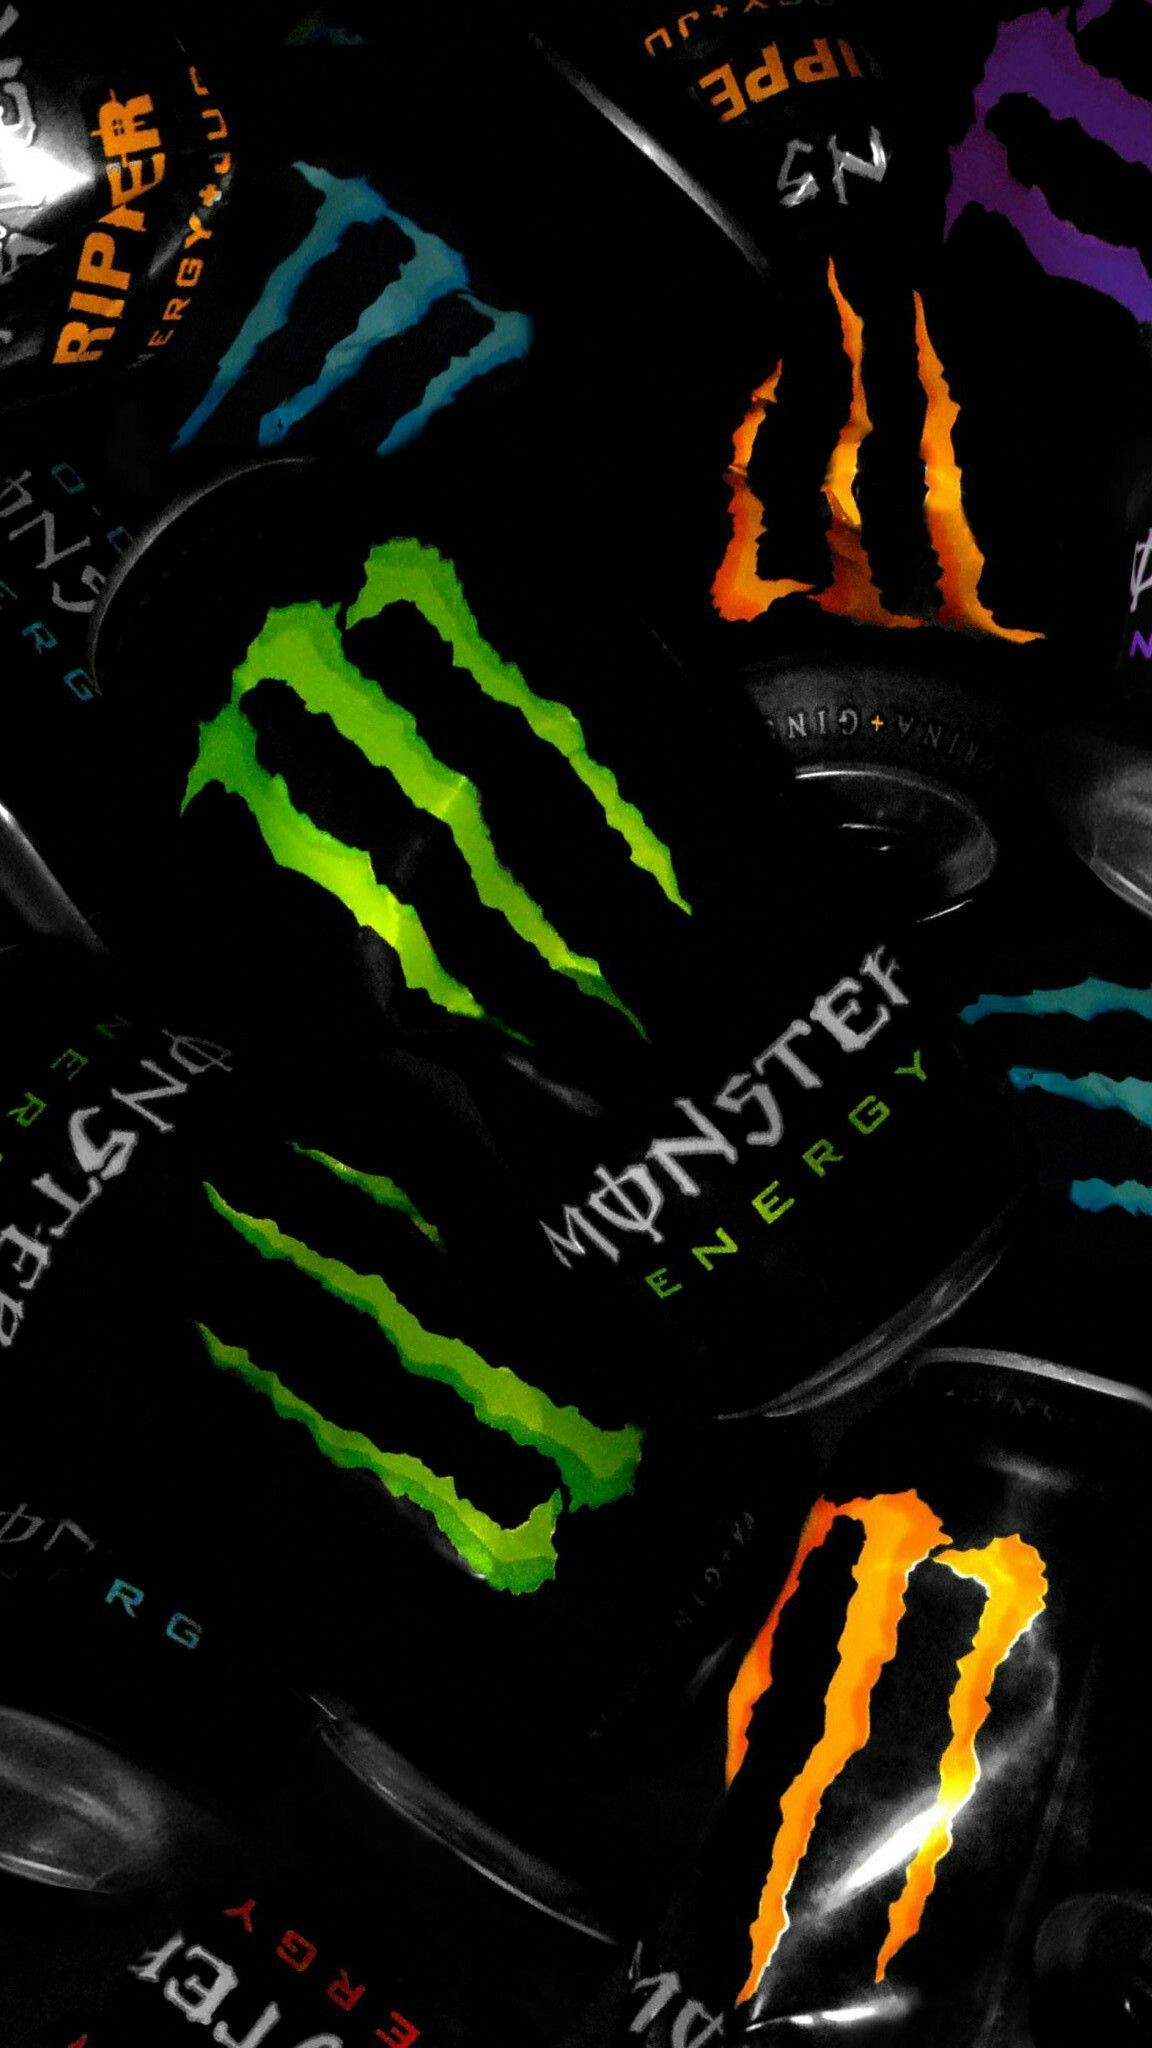 Monster Energy Wallpapers